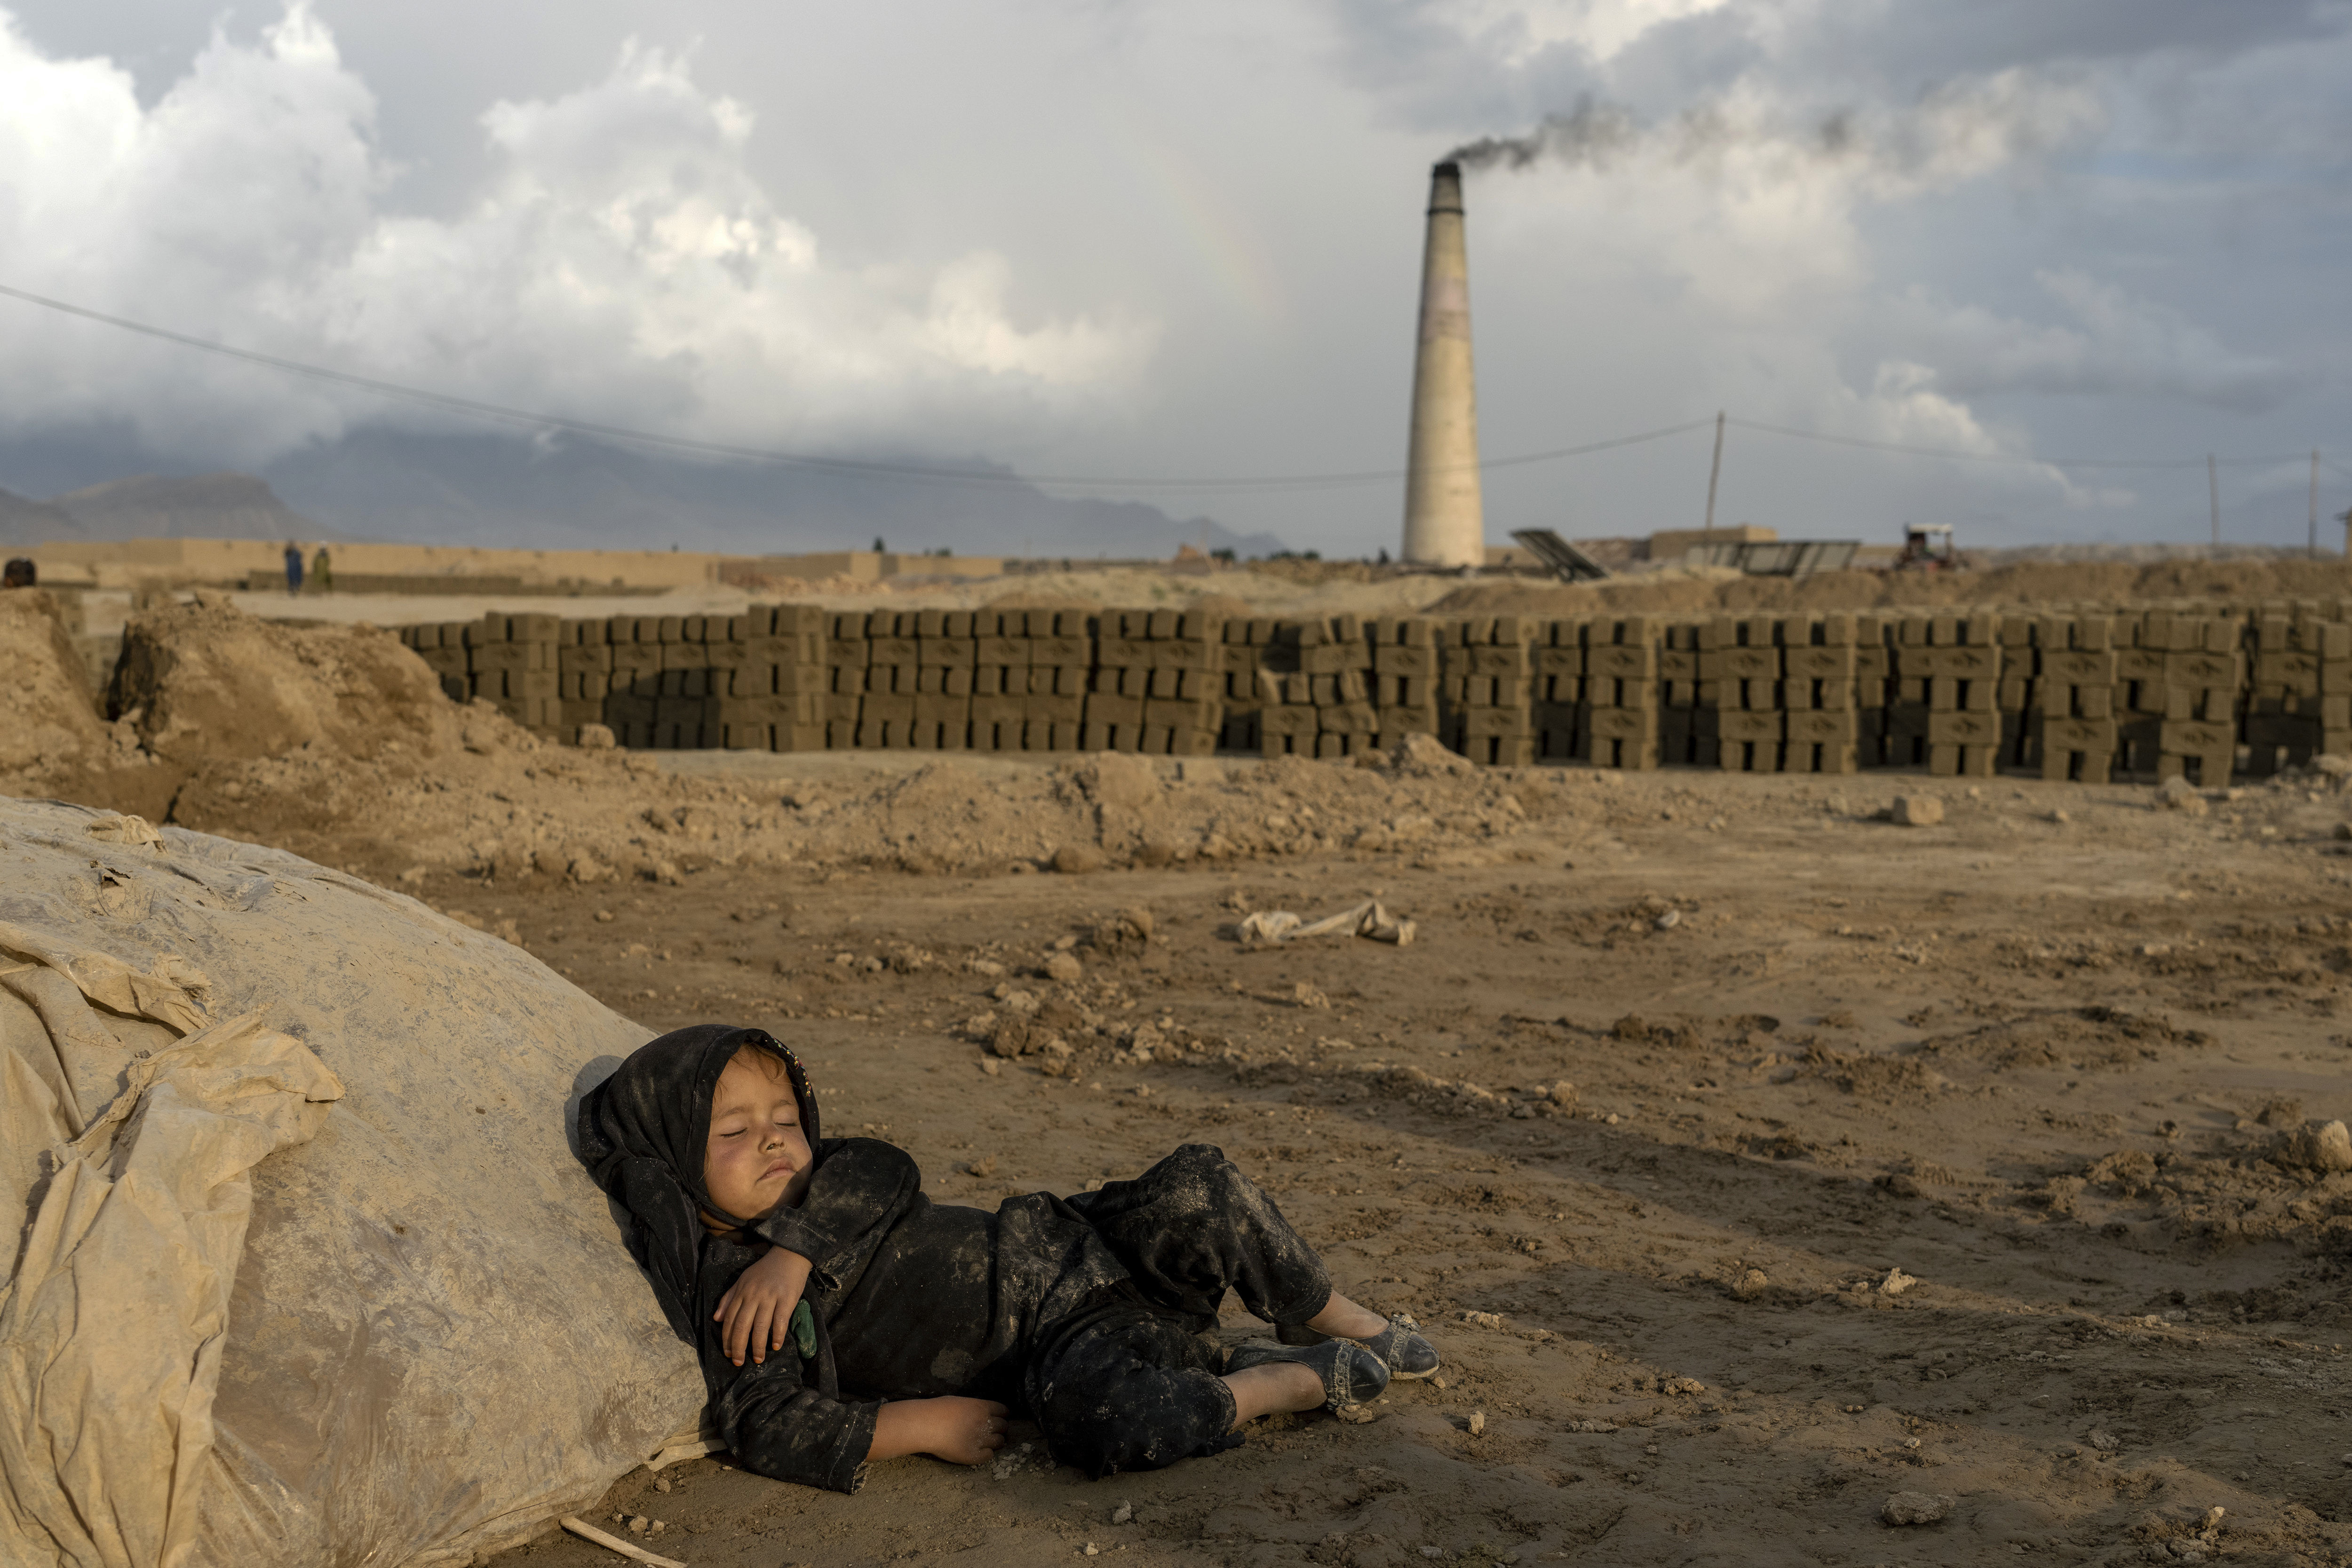 Afghanistan Child Labor